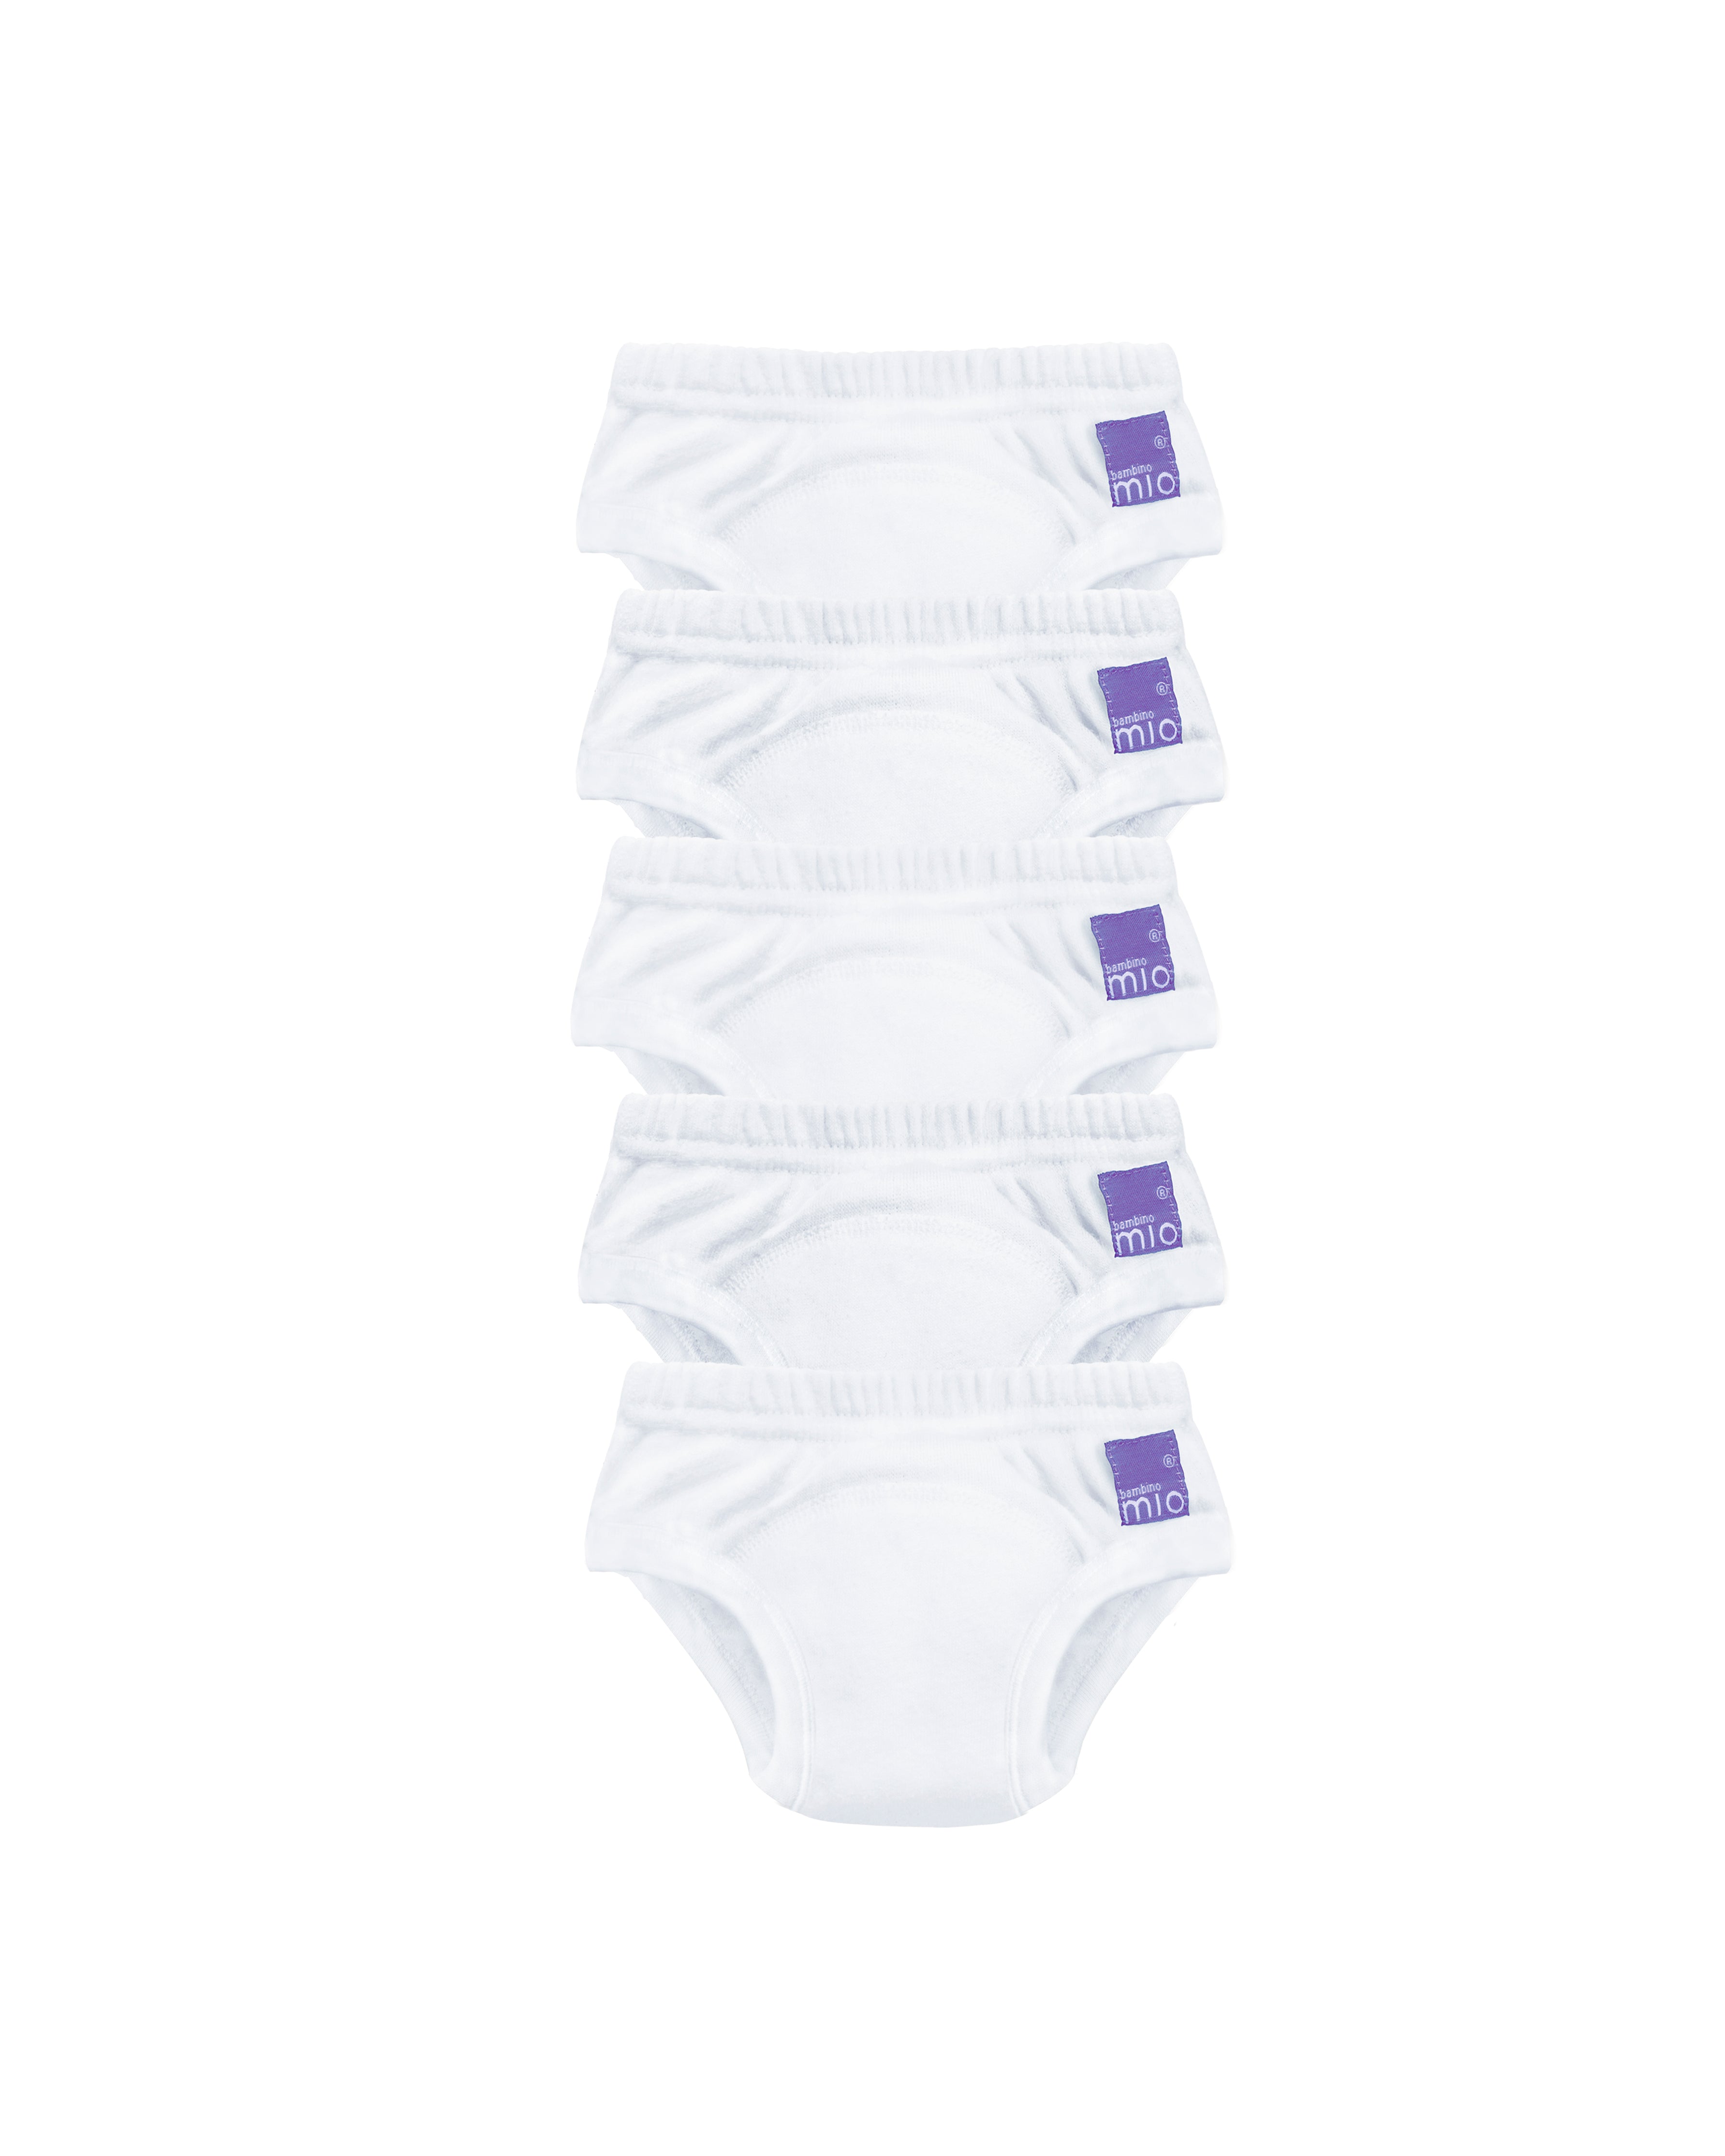 Revolutionary Reusable potty training pants, 5 pack - Bambino Mio (UK & IE)